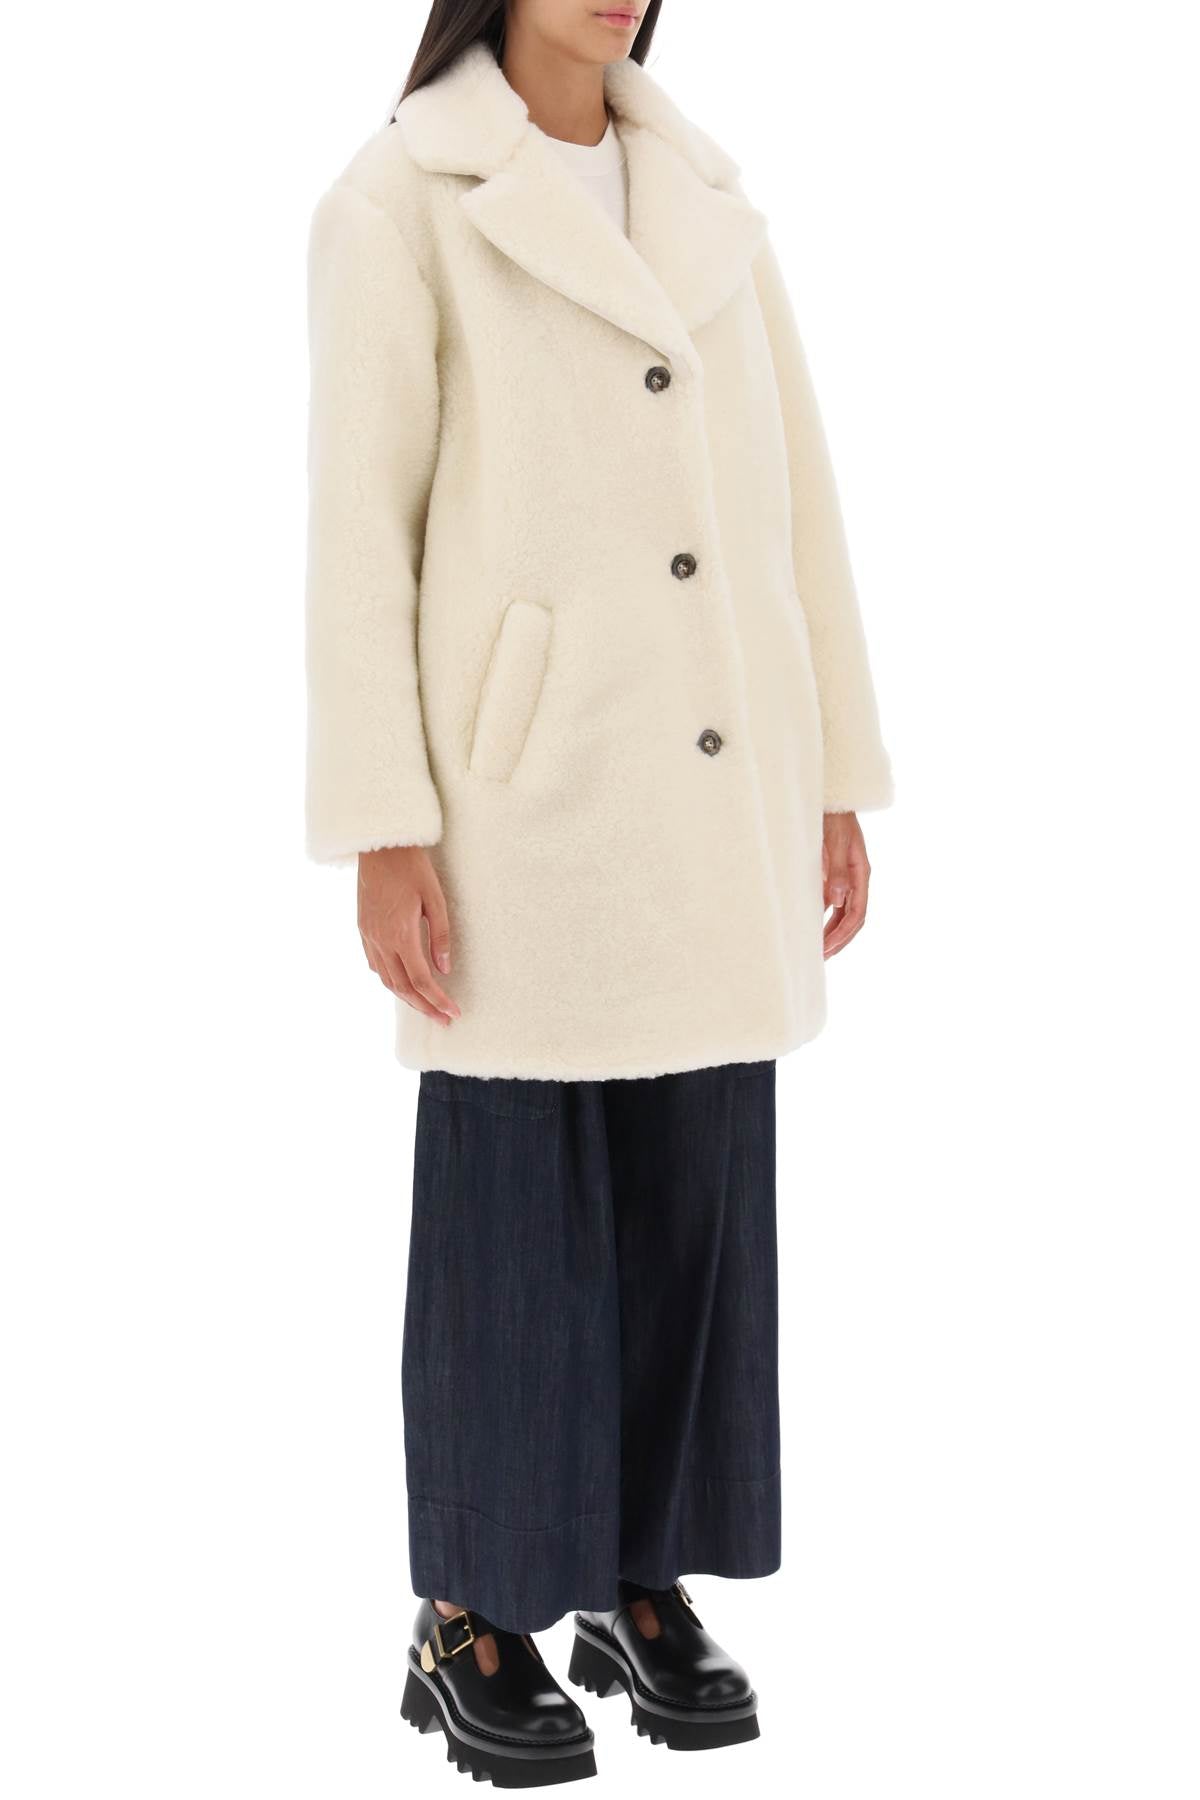 White Teddy Jacket - Oversized Single-Breasted Coat for Women